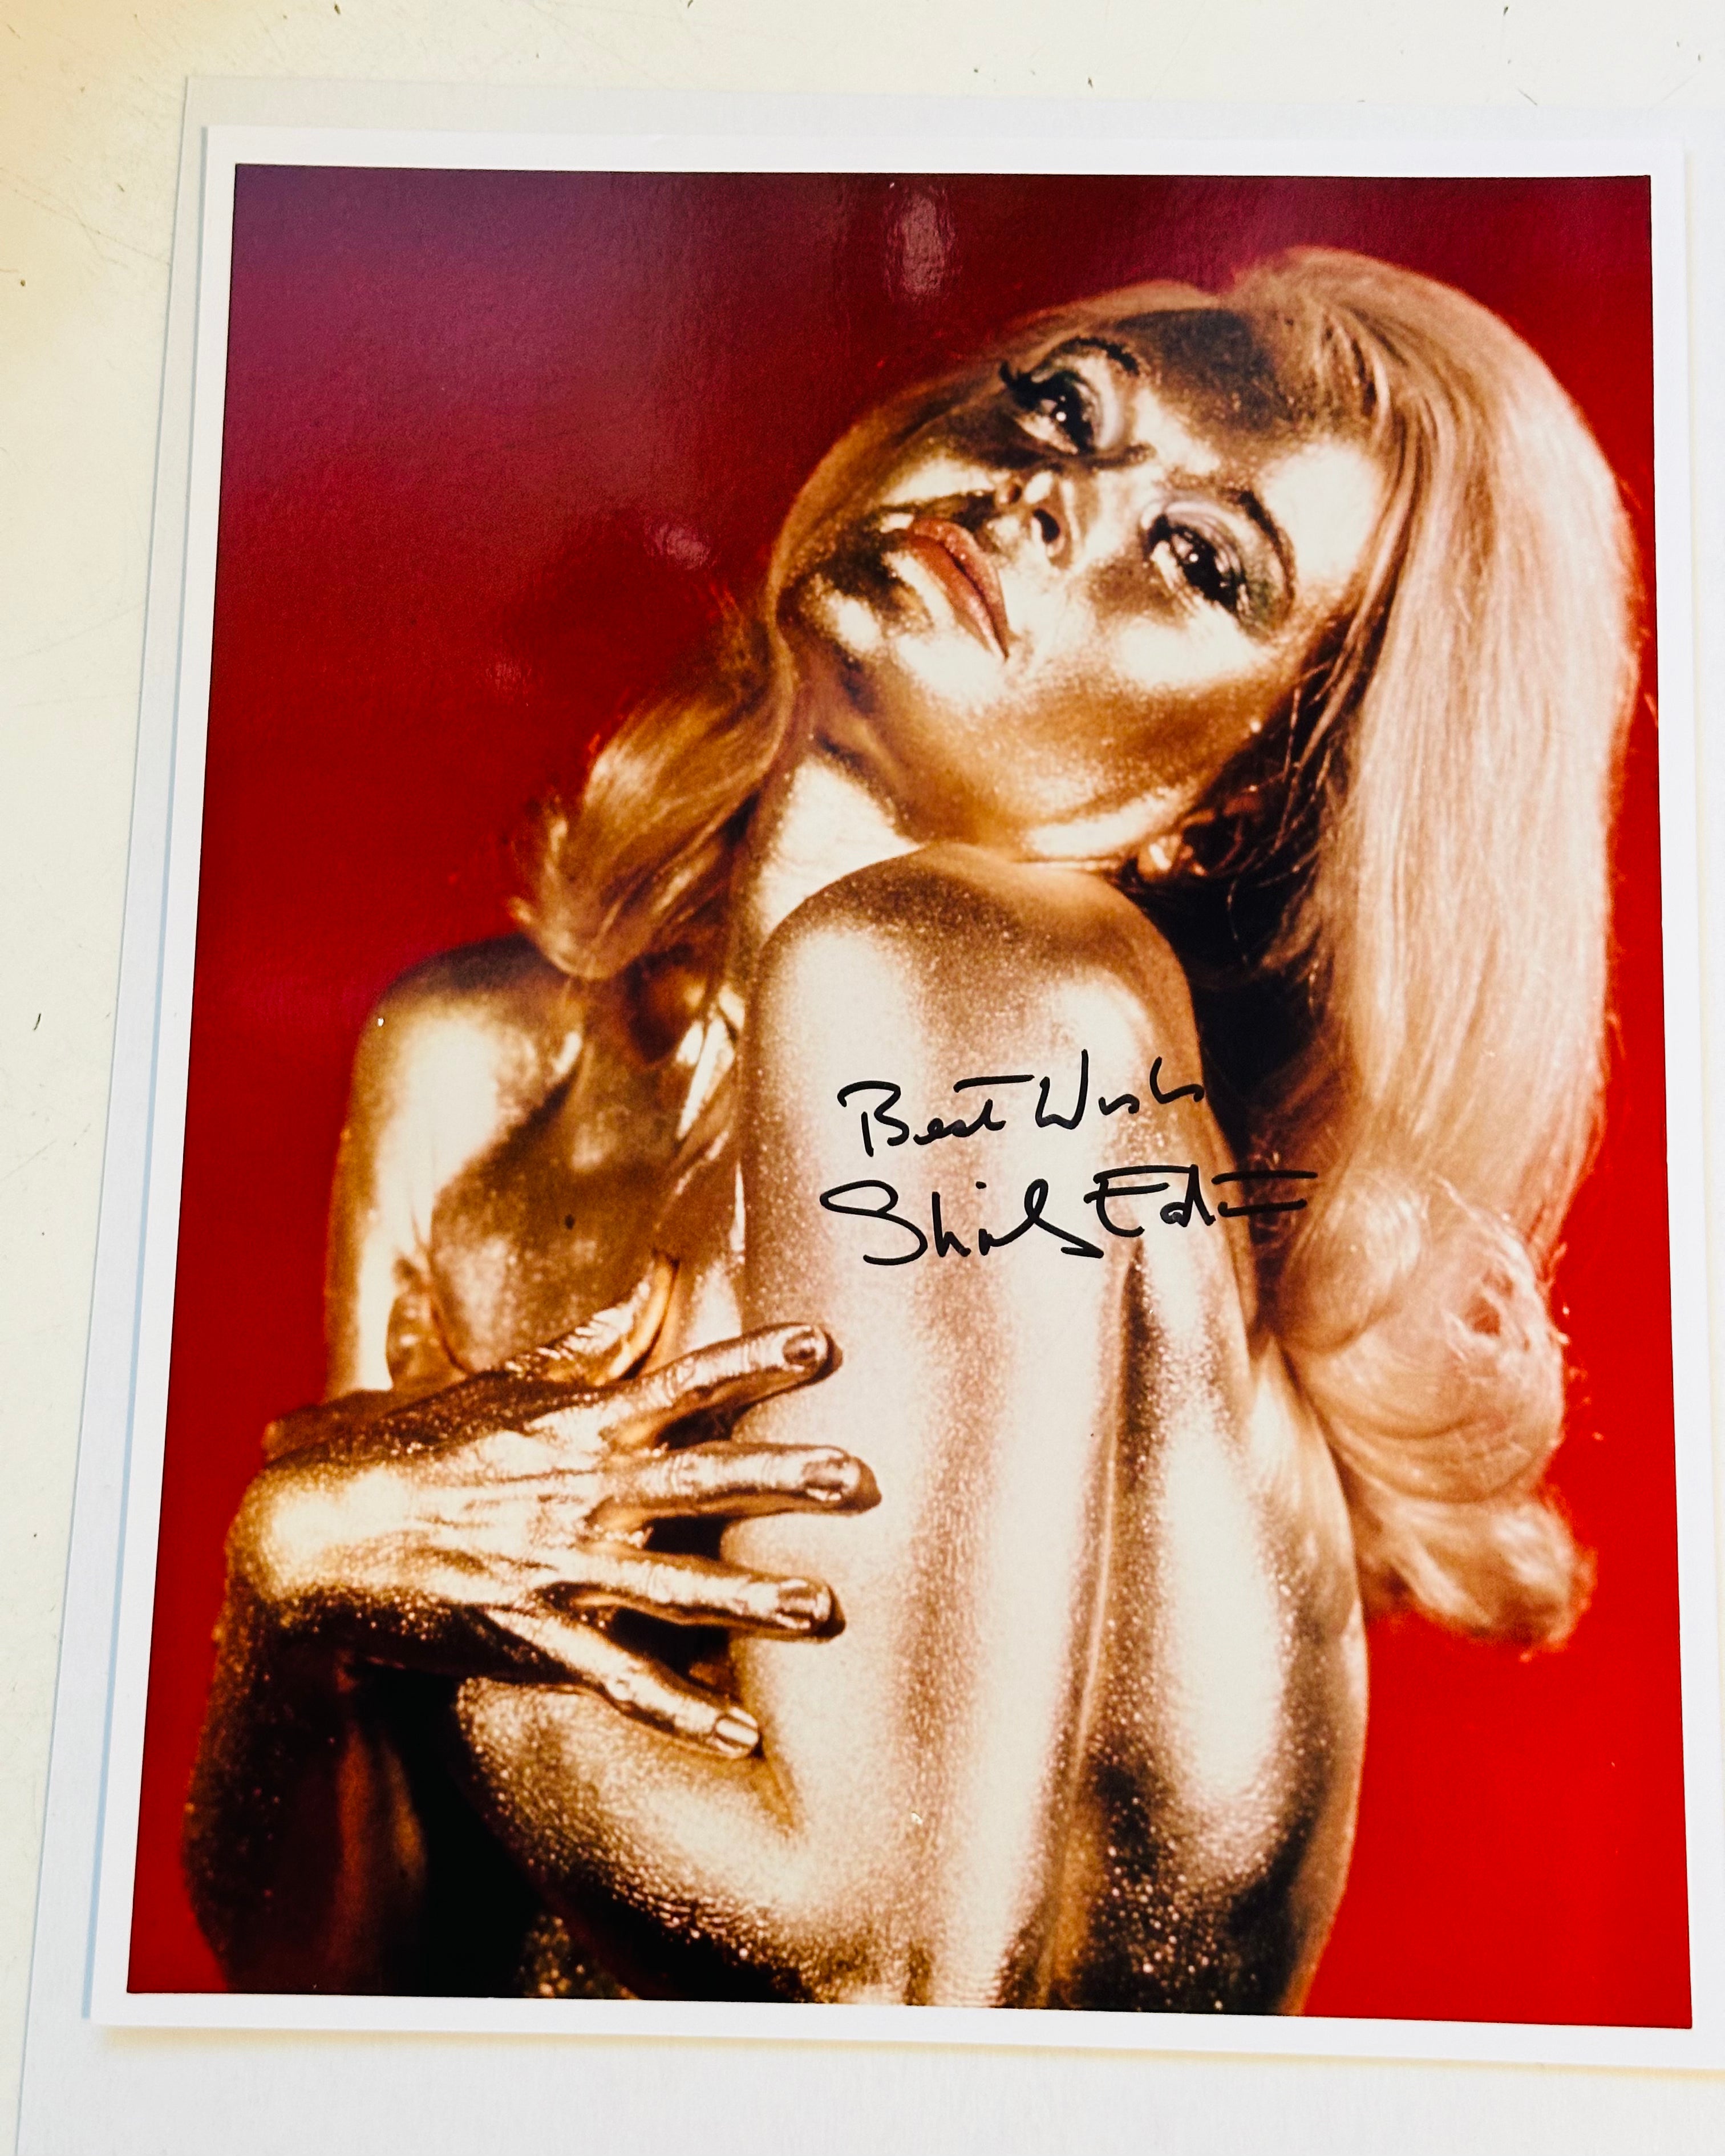 James Bond Shirley Eaton rare autographed 8 x 10 photo with COA